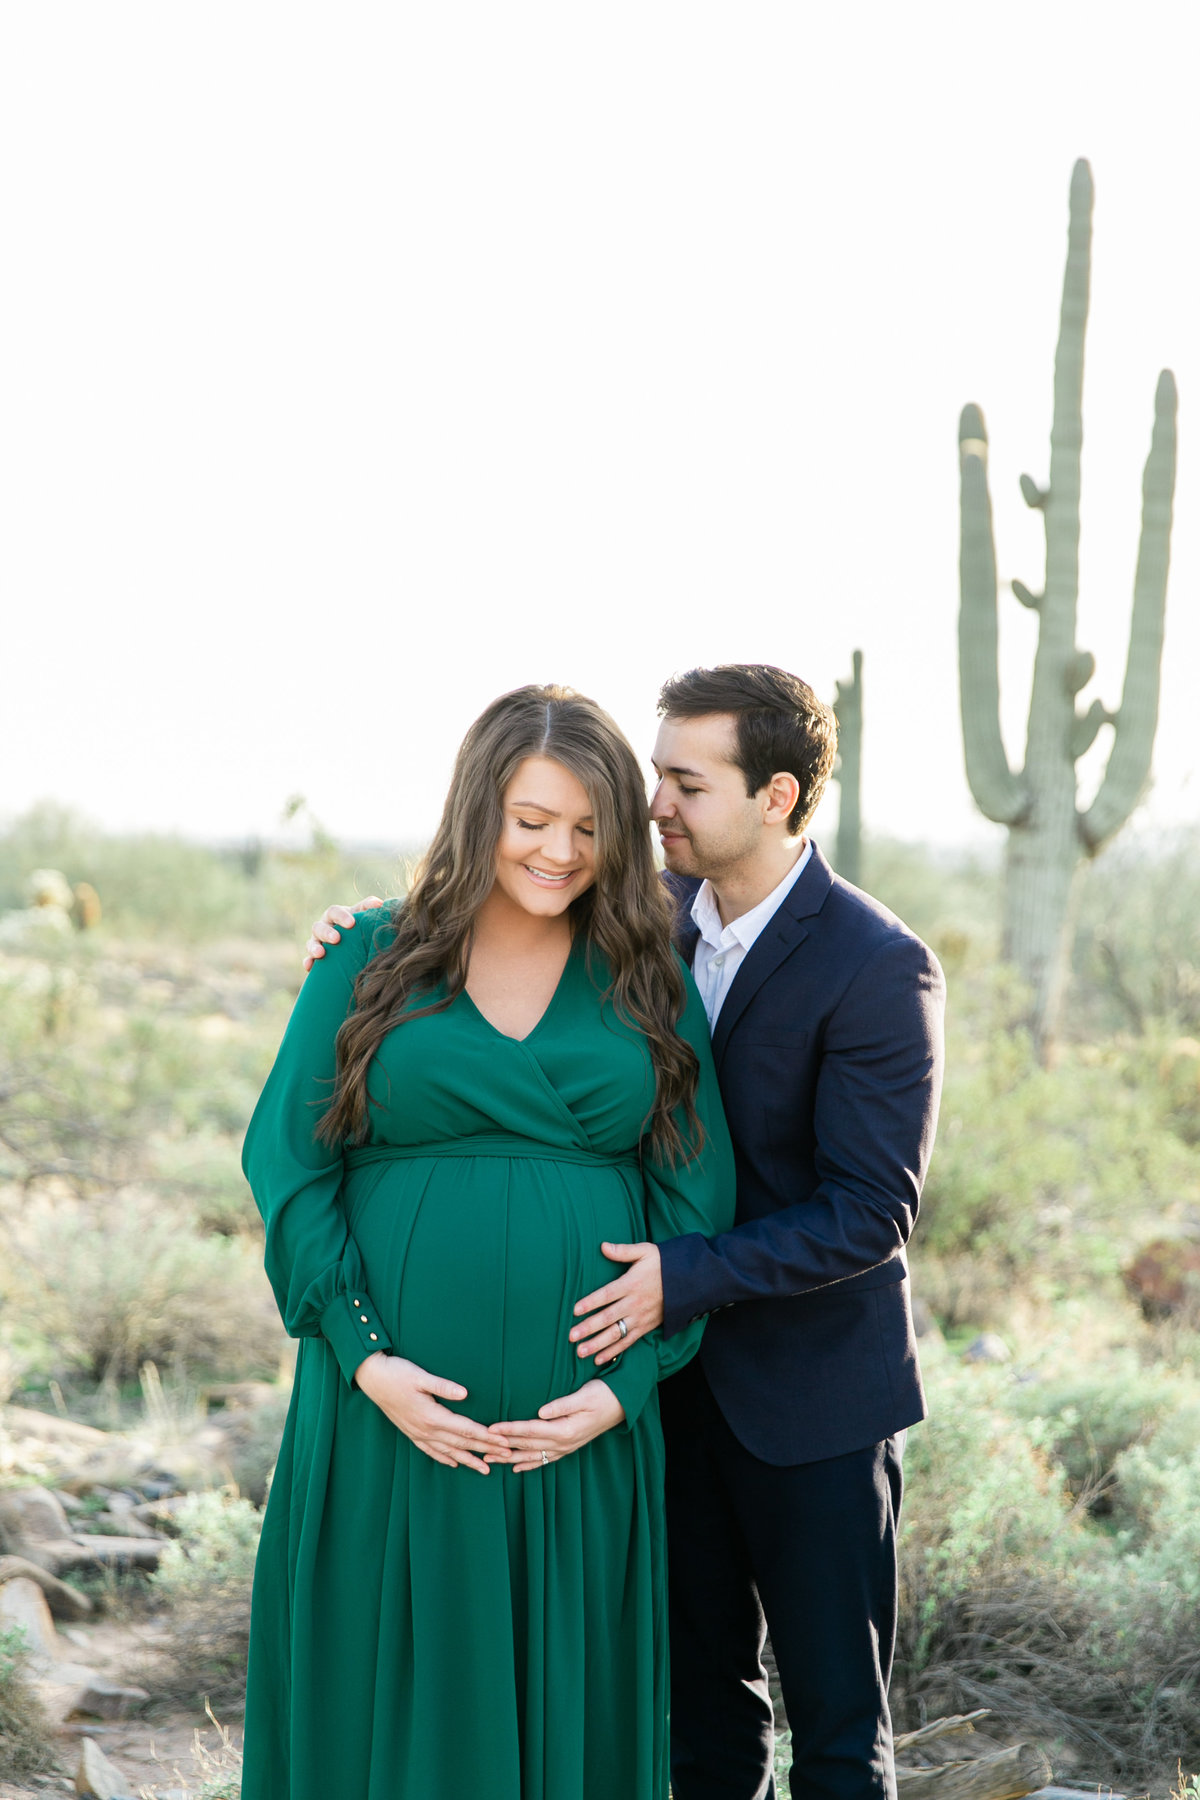 Karlie Colleen Photography - Scottsdale Arizona - Maternity Photos - Shelby & Cris-21